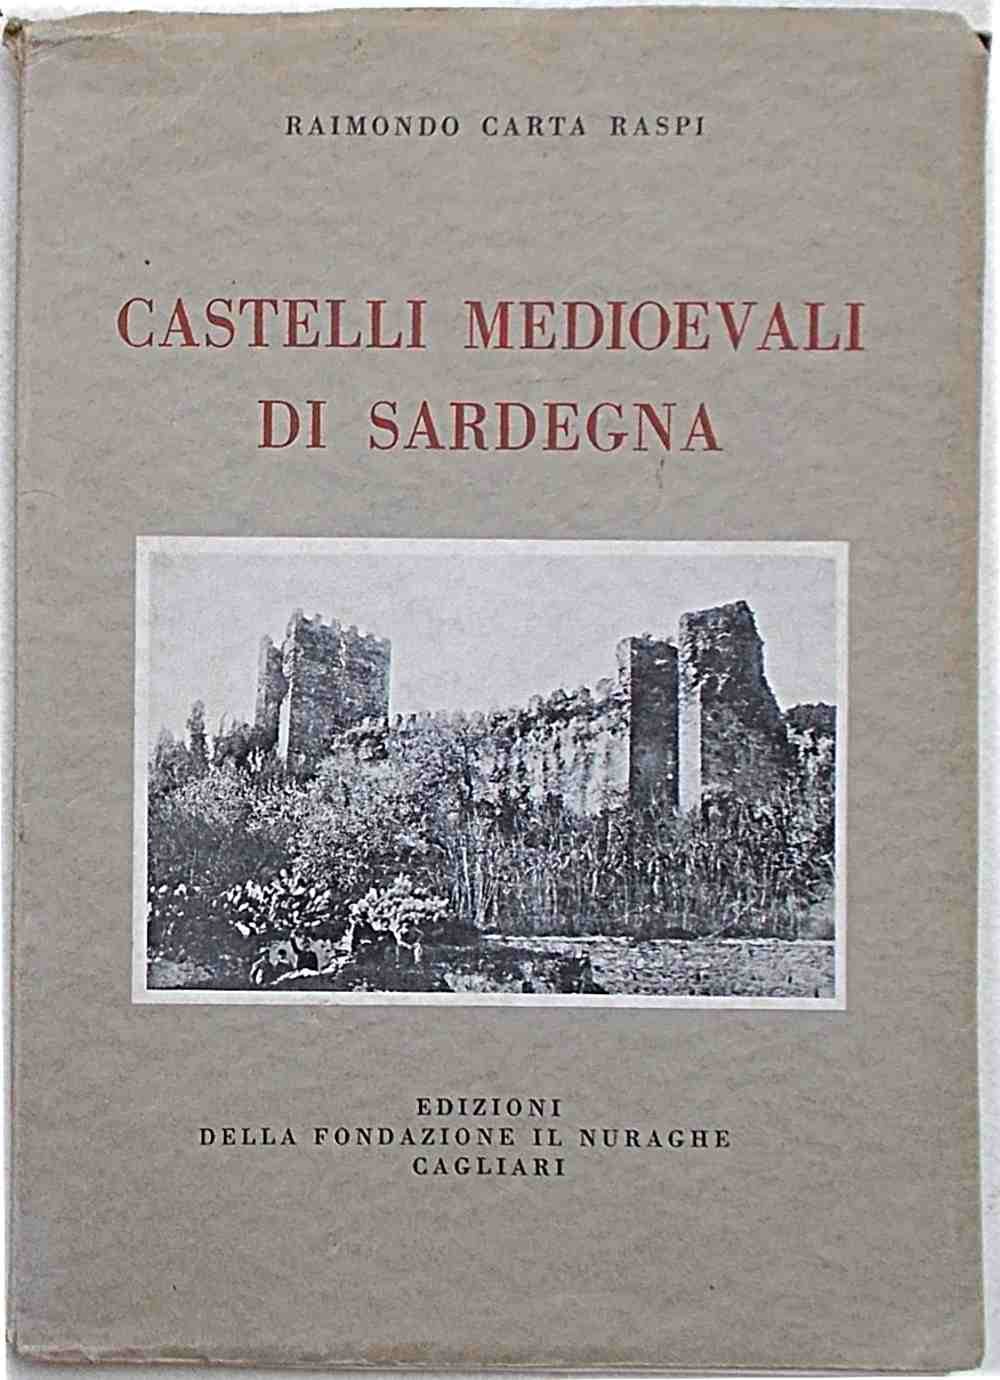 public/img/livres/1933_castellimedievalidisardegna.jpg image